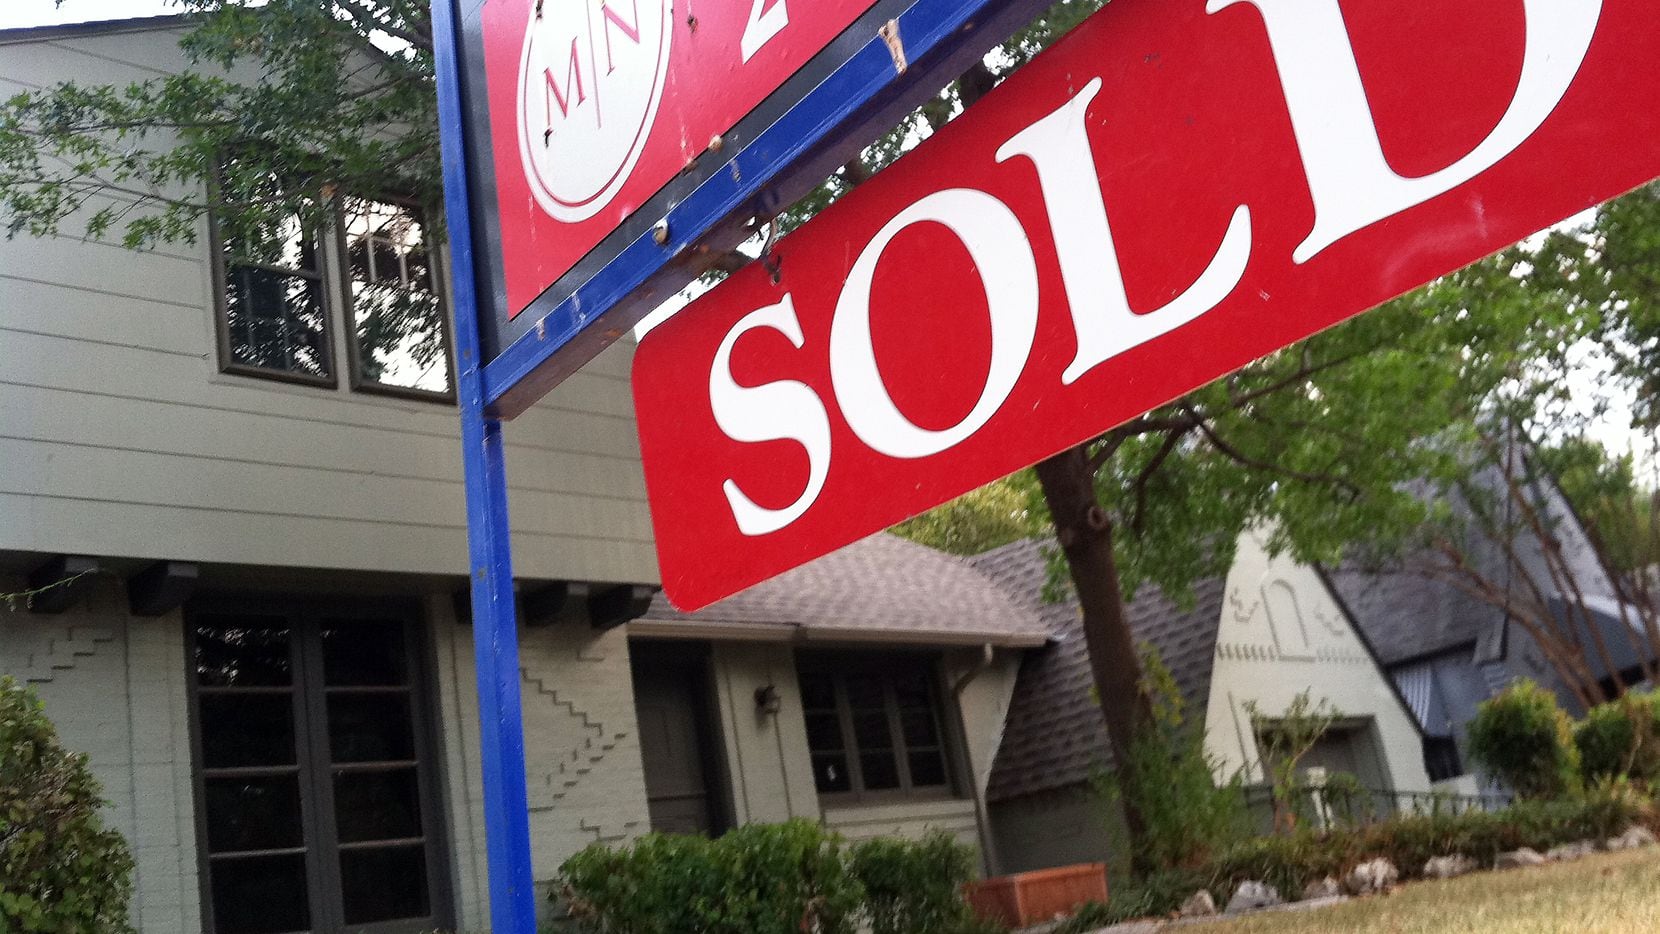 Dallas area home prices were up 5.94% in November.